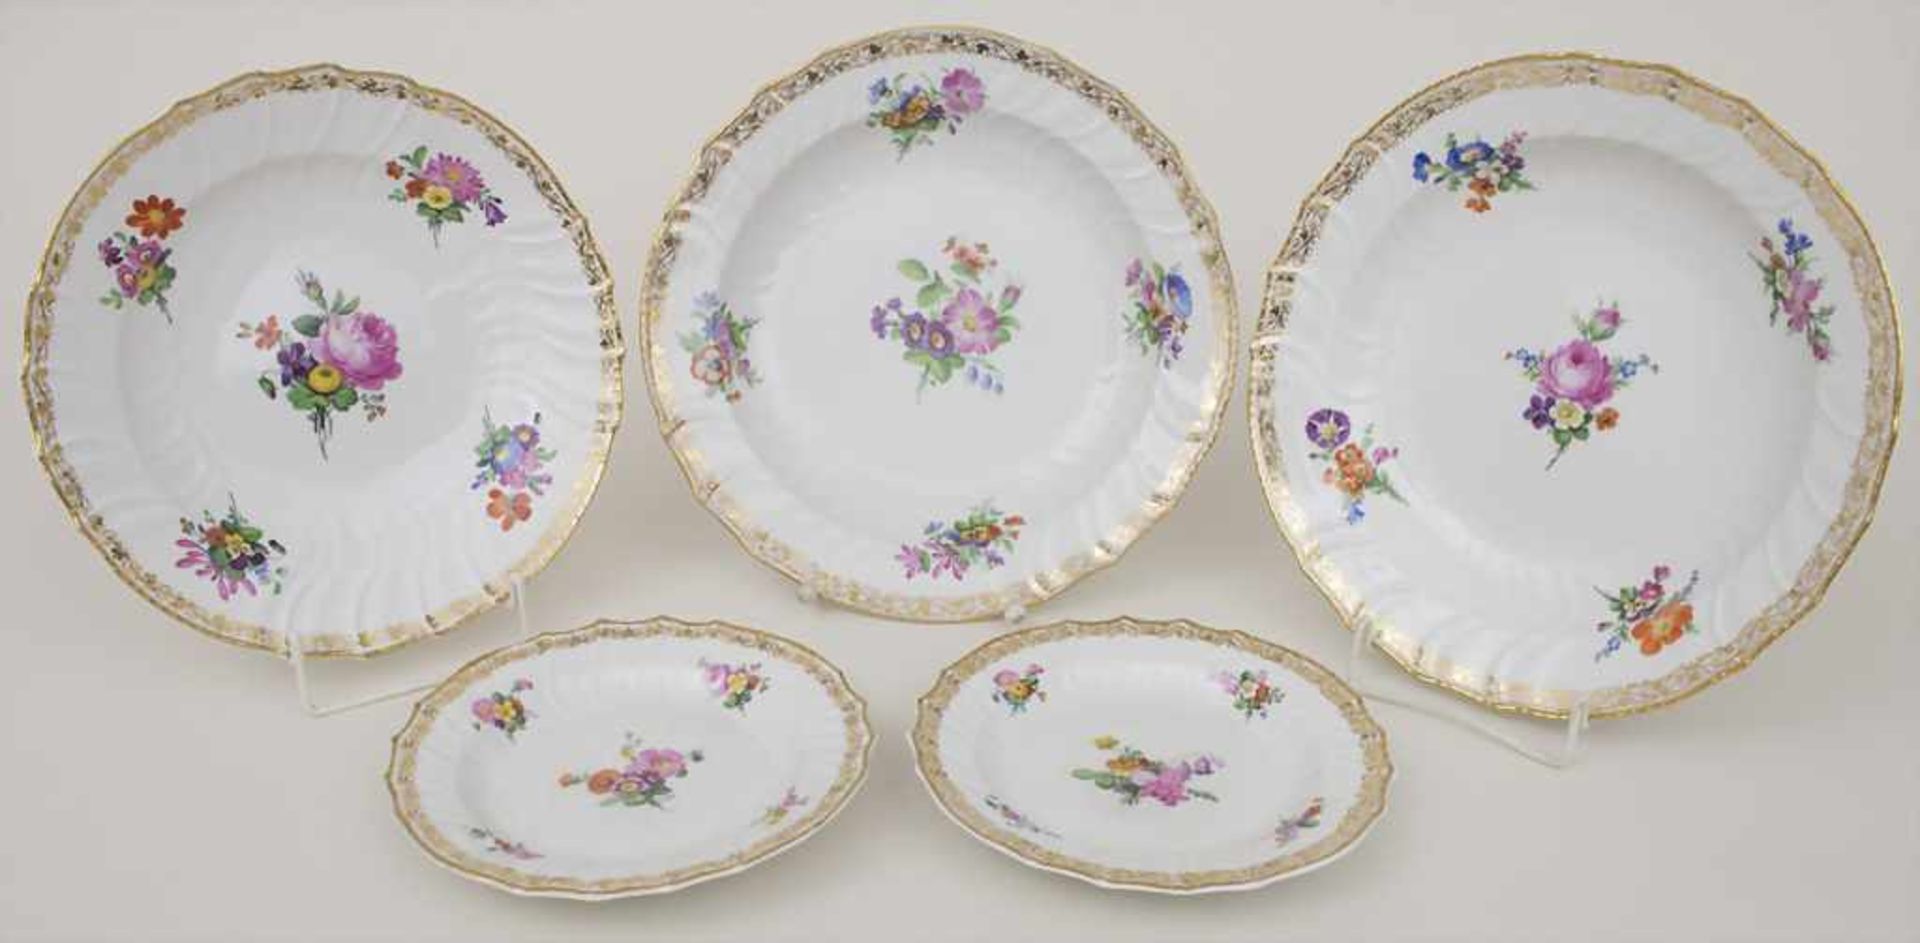 5 Teller mit Blumen und Goldrankenbordüren / 5 plates with flowers and gold tendril borders, KPM,